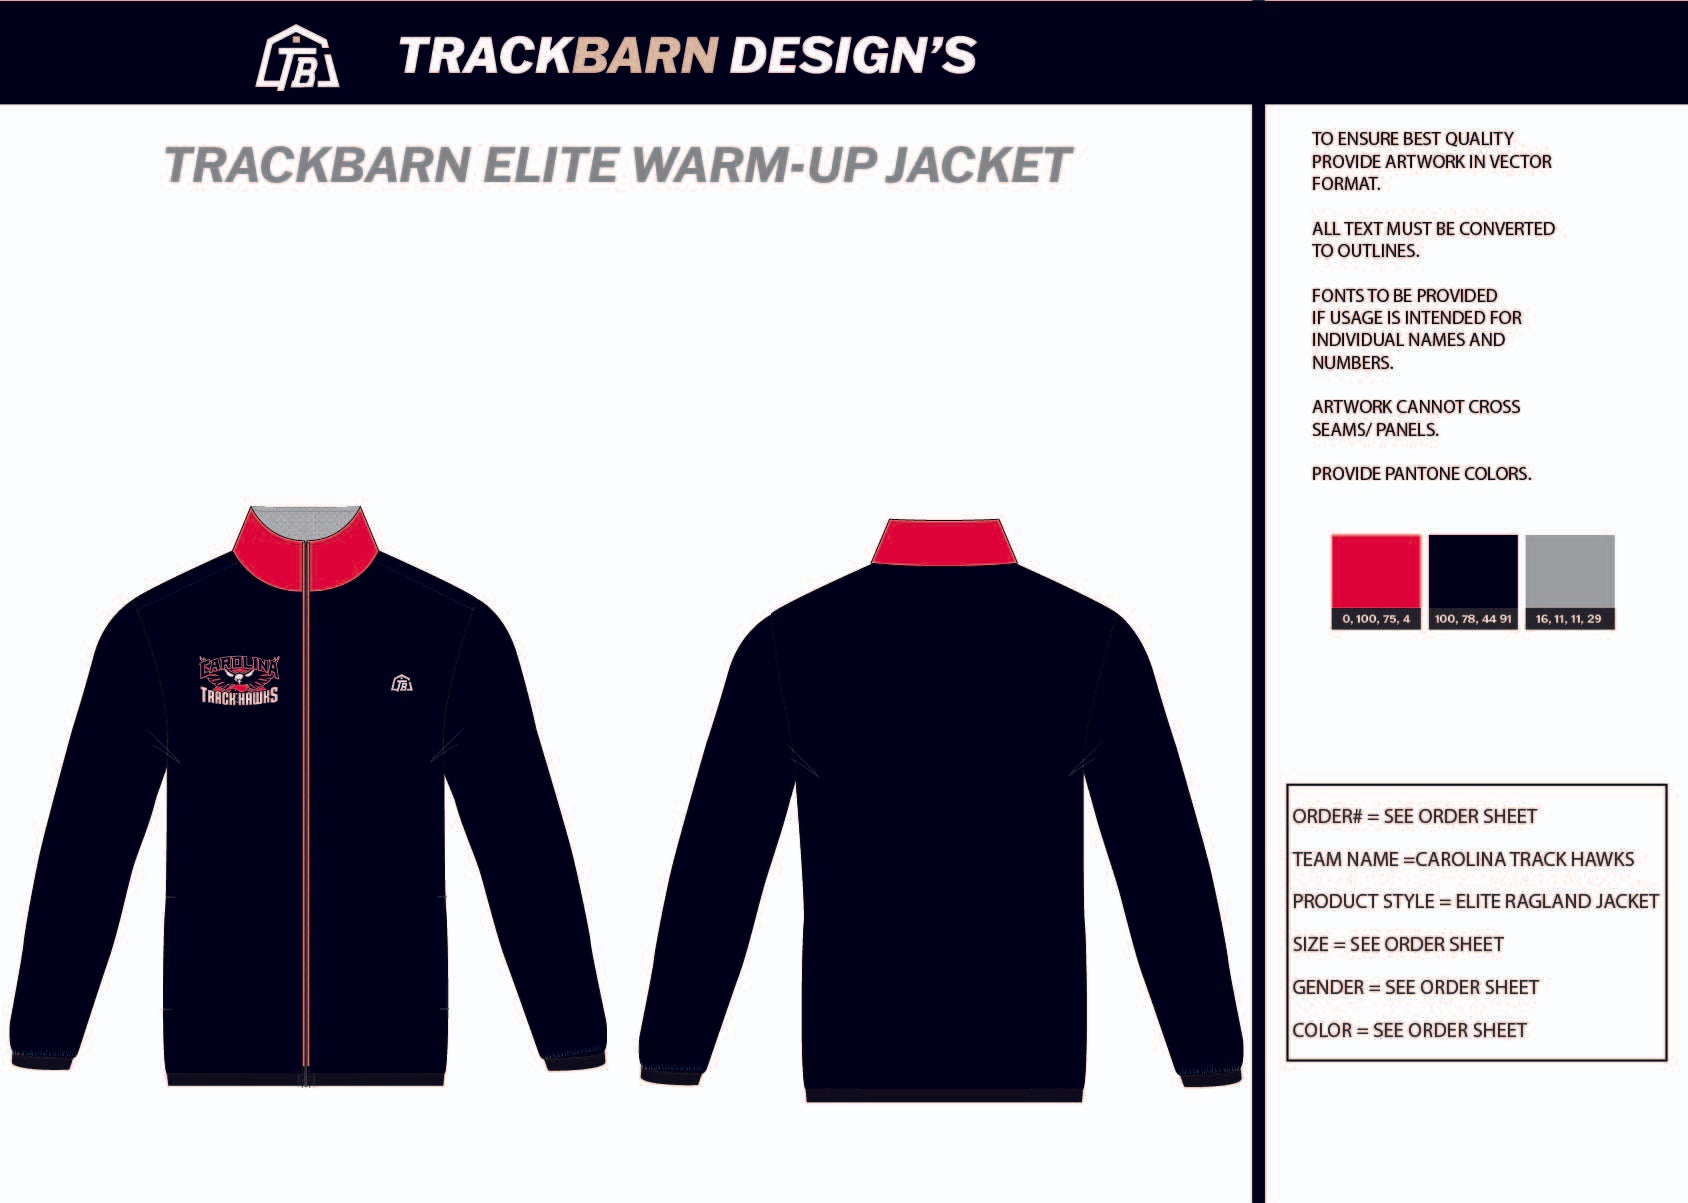 Carolina-Track-Hawks Mens Full Zip Jacket